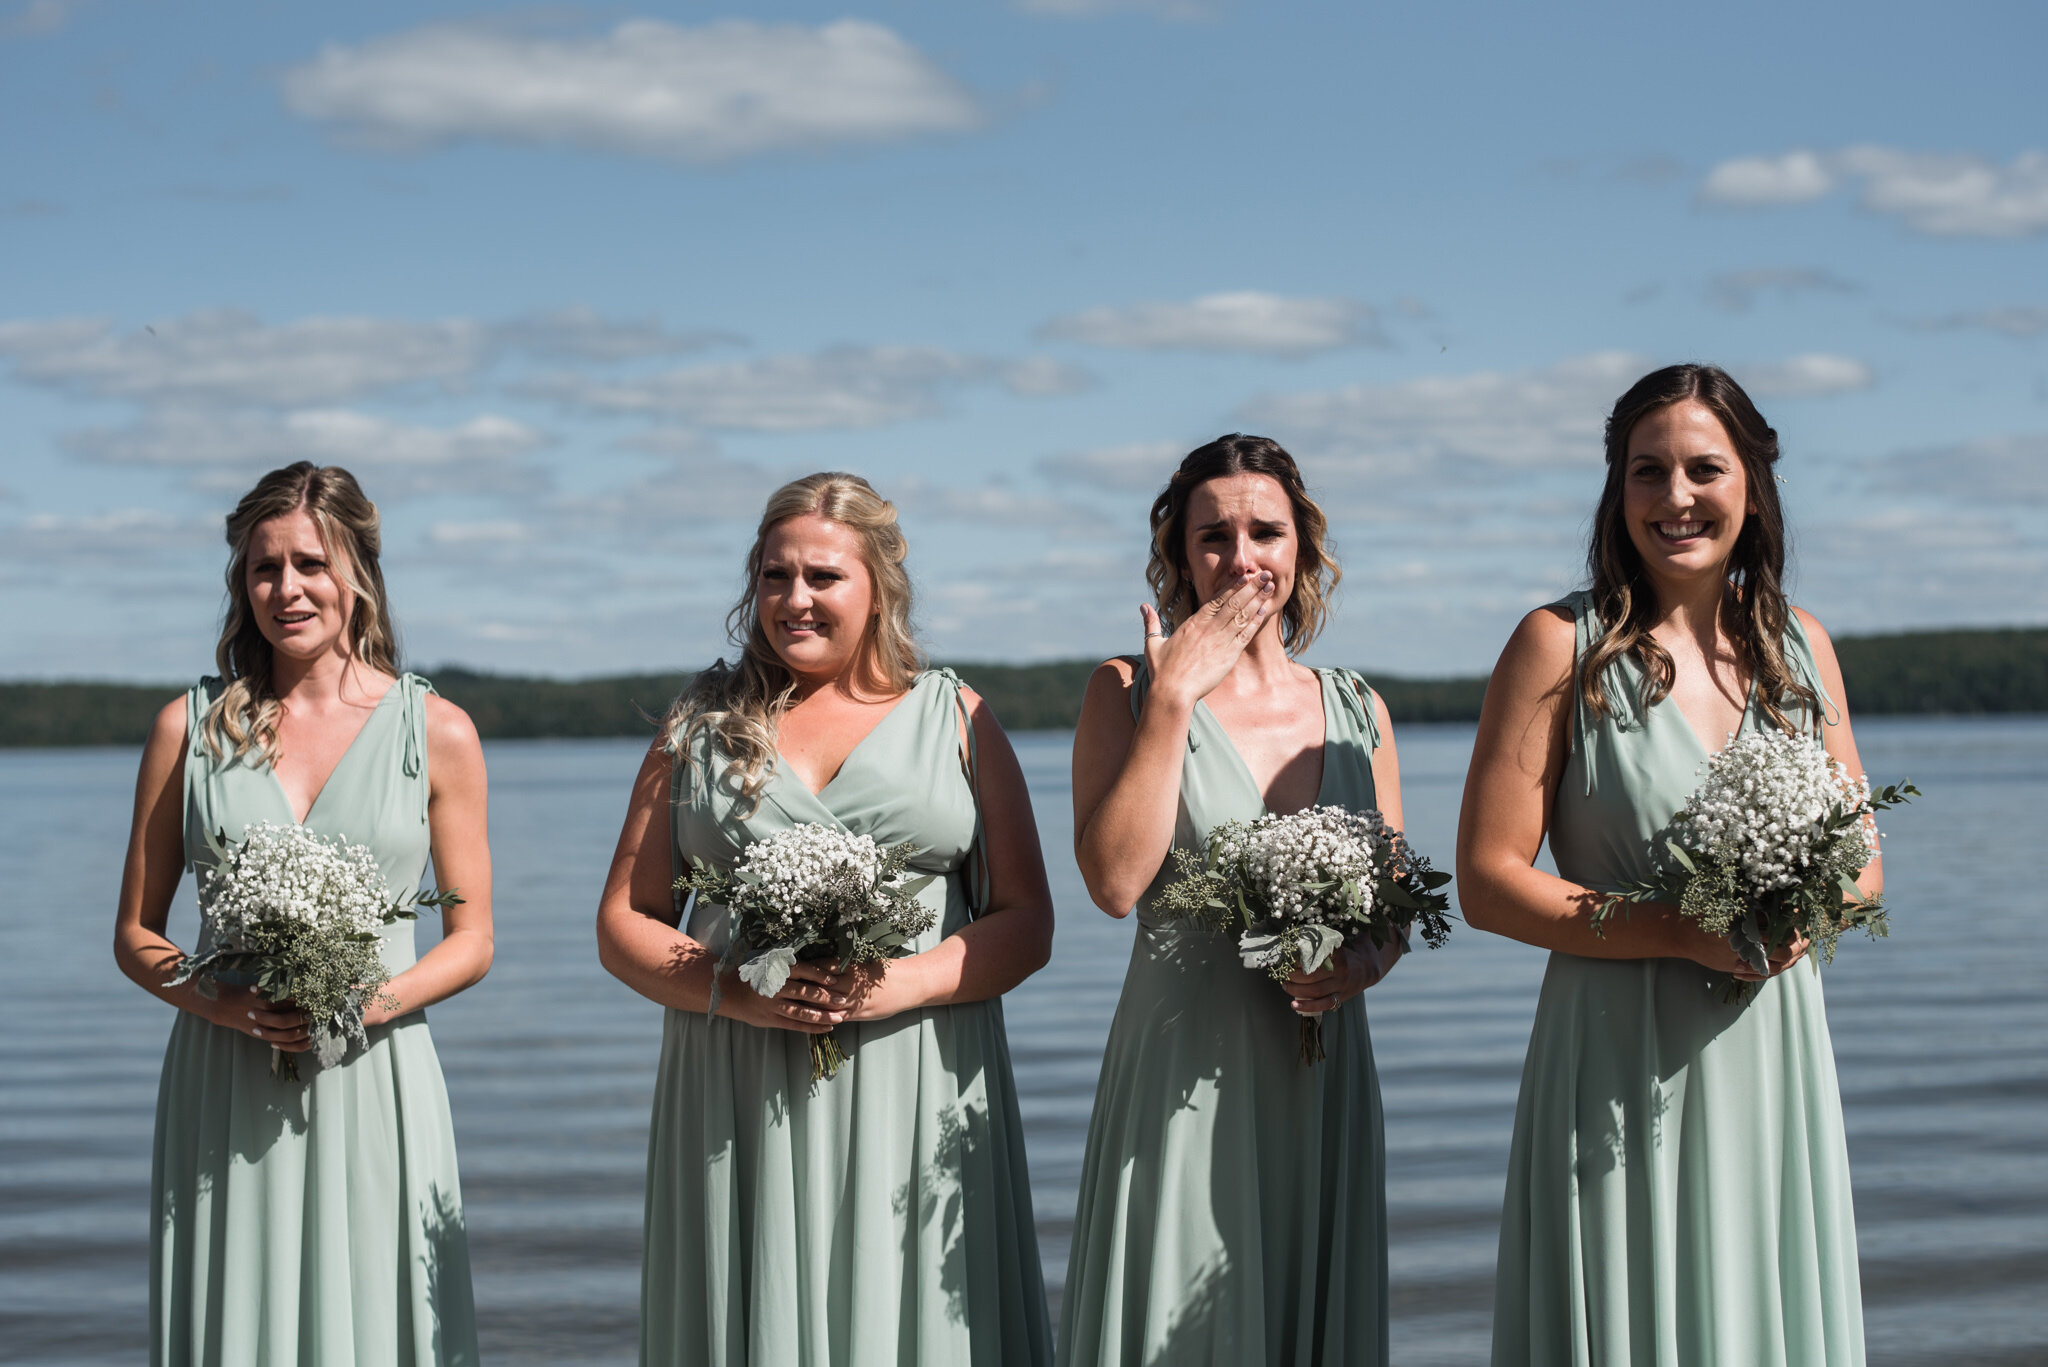 621-emotional-bridesmaids-during-lake-outdoor-wedding-ceremony.jpg